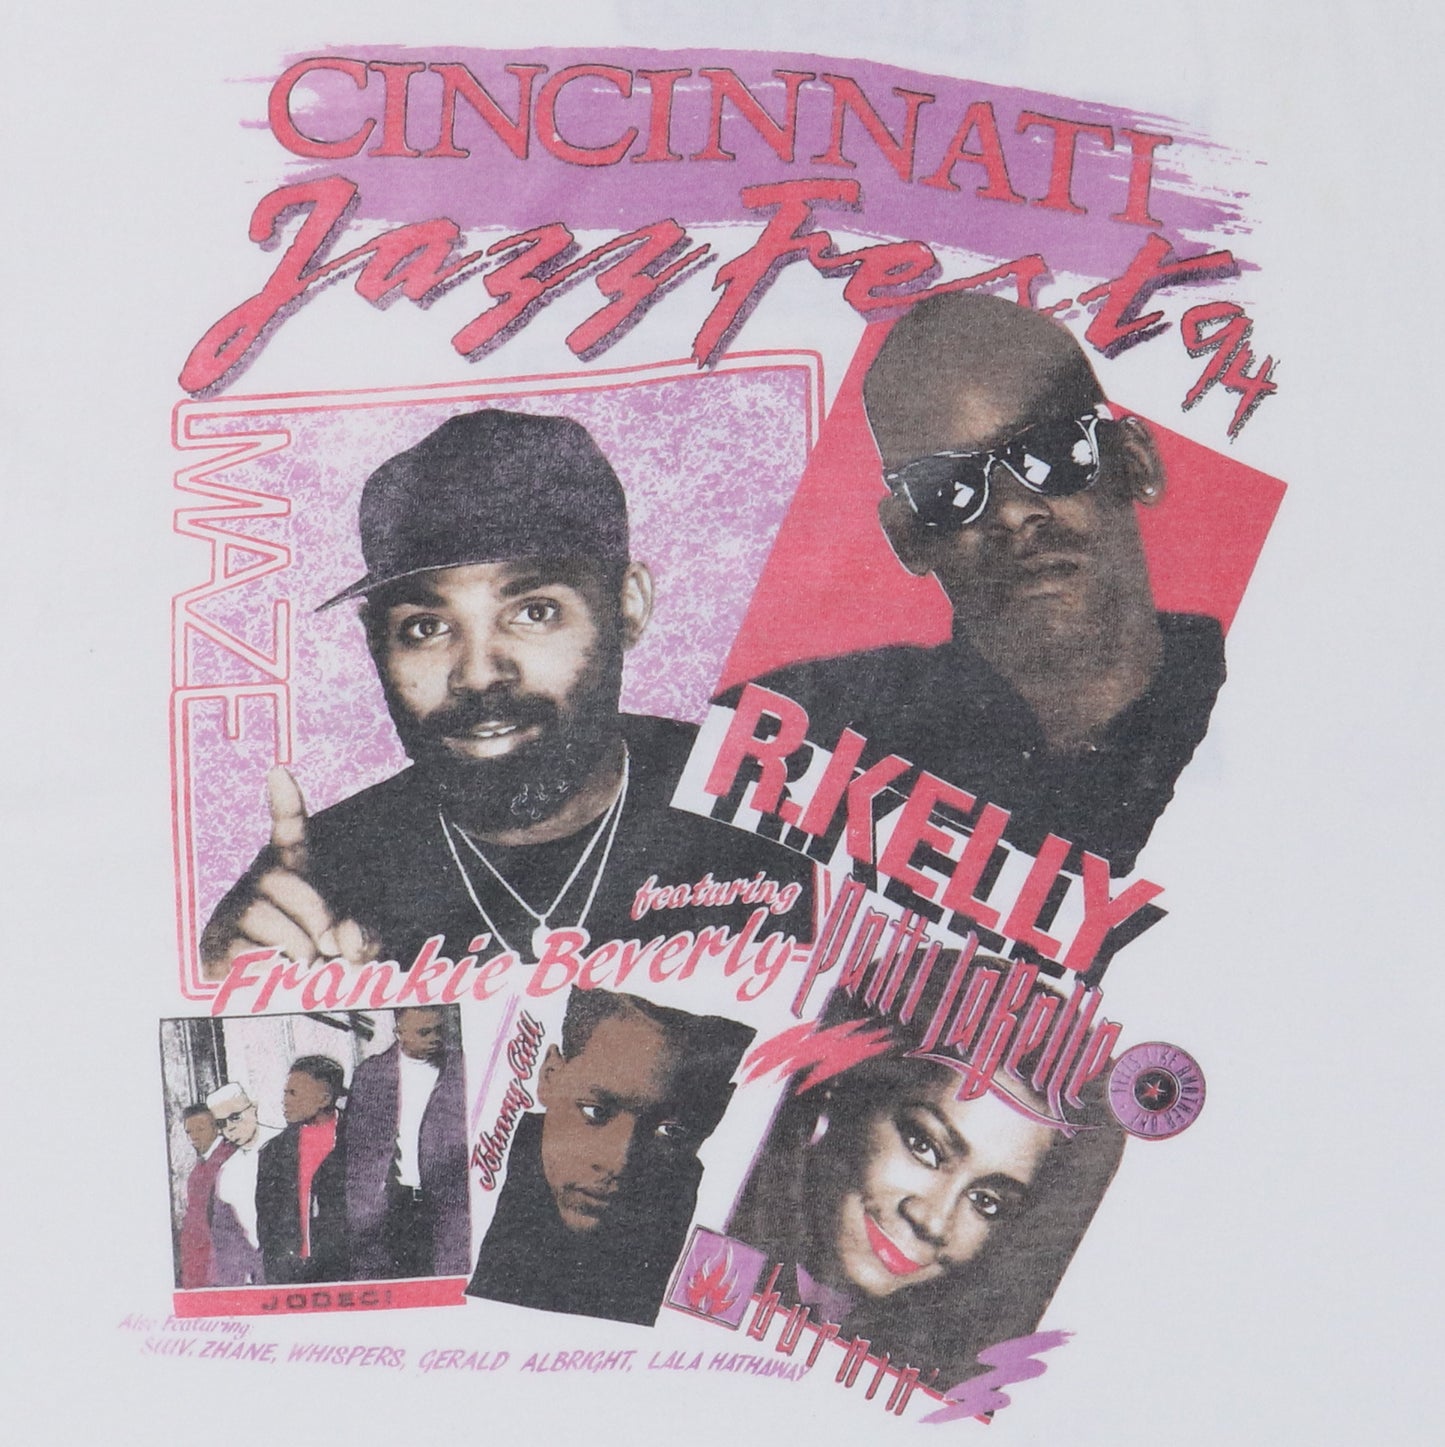 1994 Cincinnati Jazz Festival R Kelly Jodeci SWV Concert Shirt